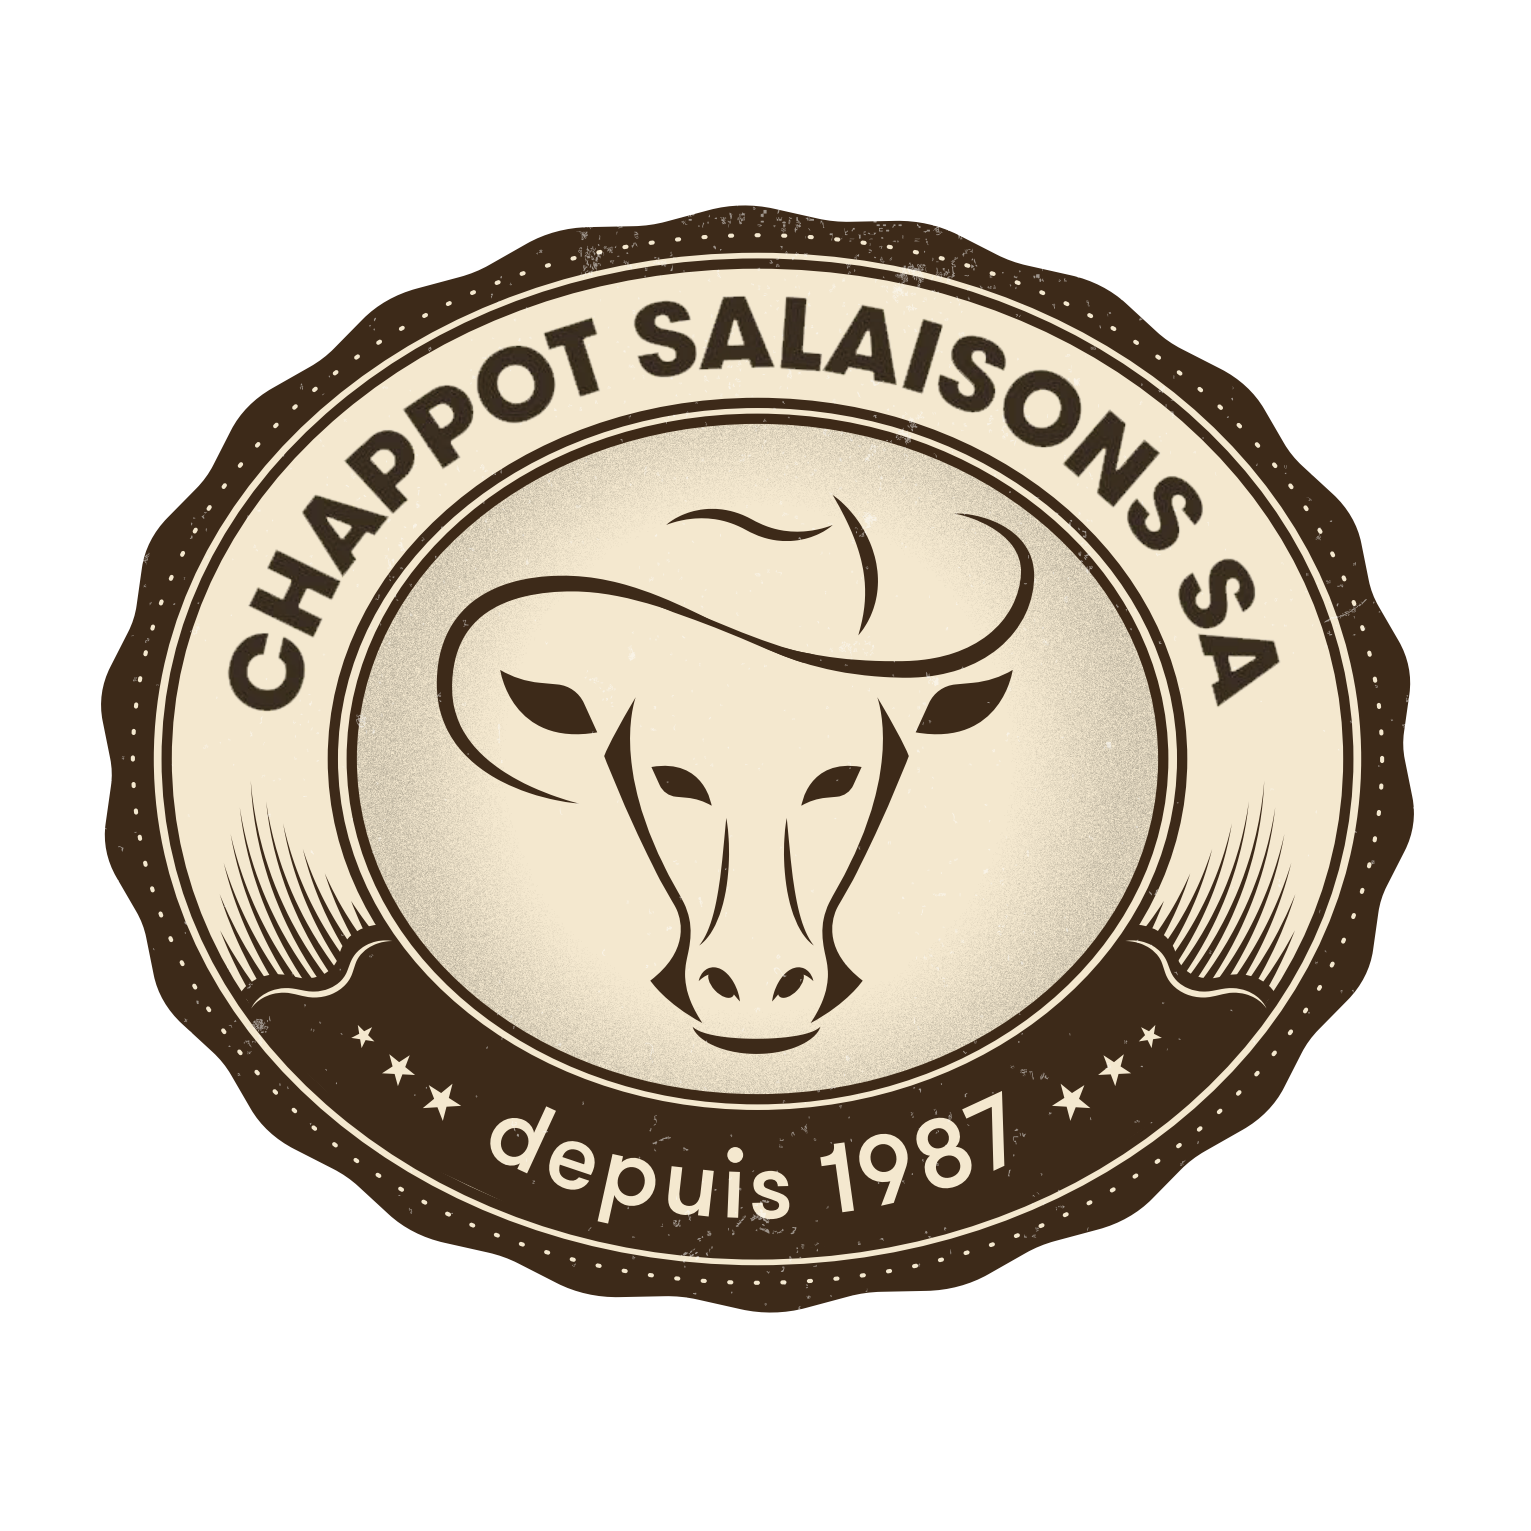 CHAPPOT SALAISONS SA Logo